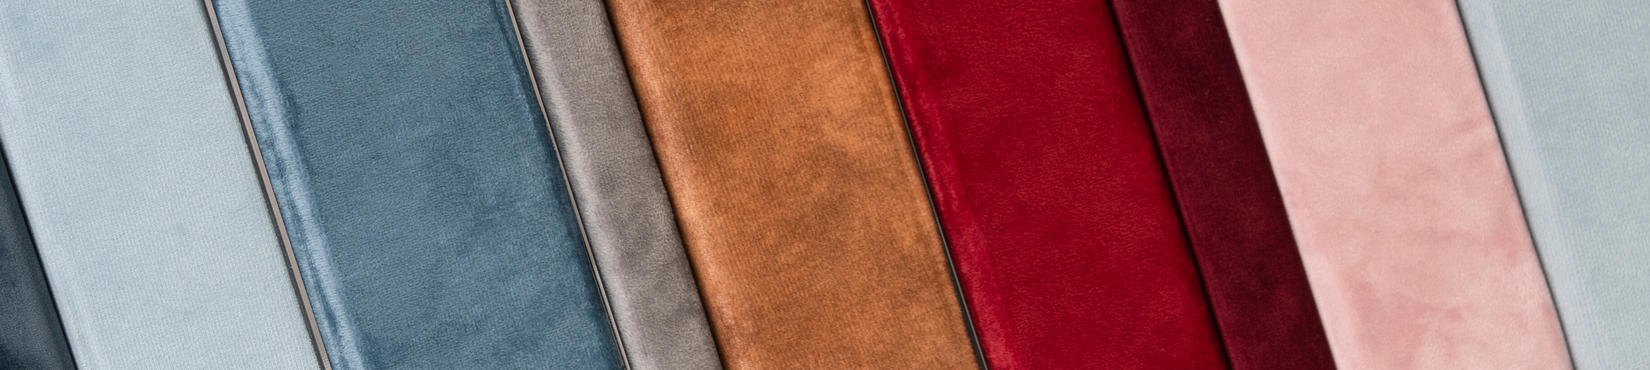 swatch book nphoto available materials velvet suede textiles leatherette